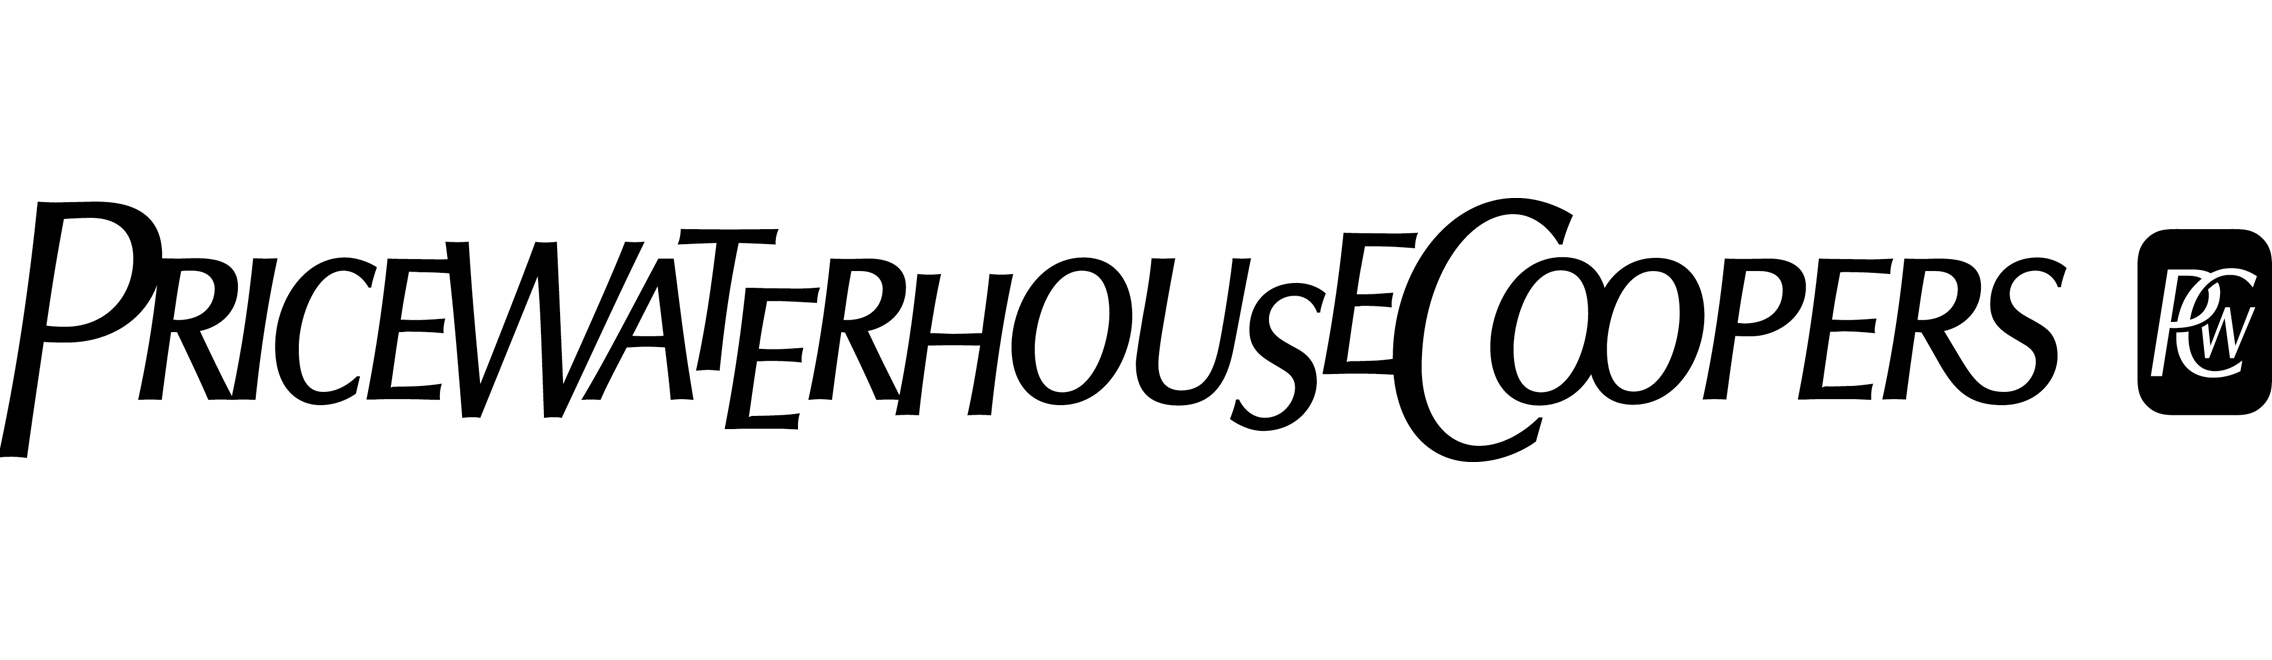 PricewaterhouseCoopers Logo - PwC logo